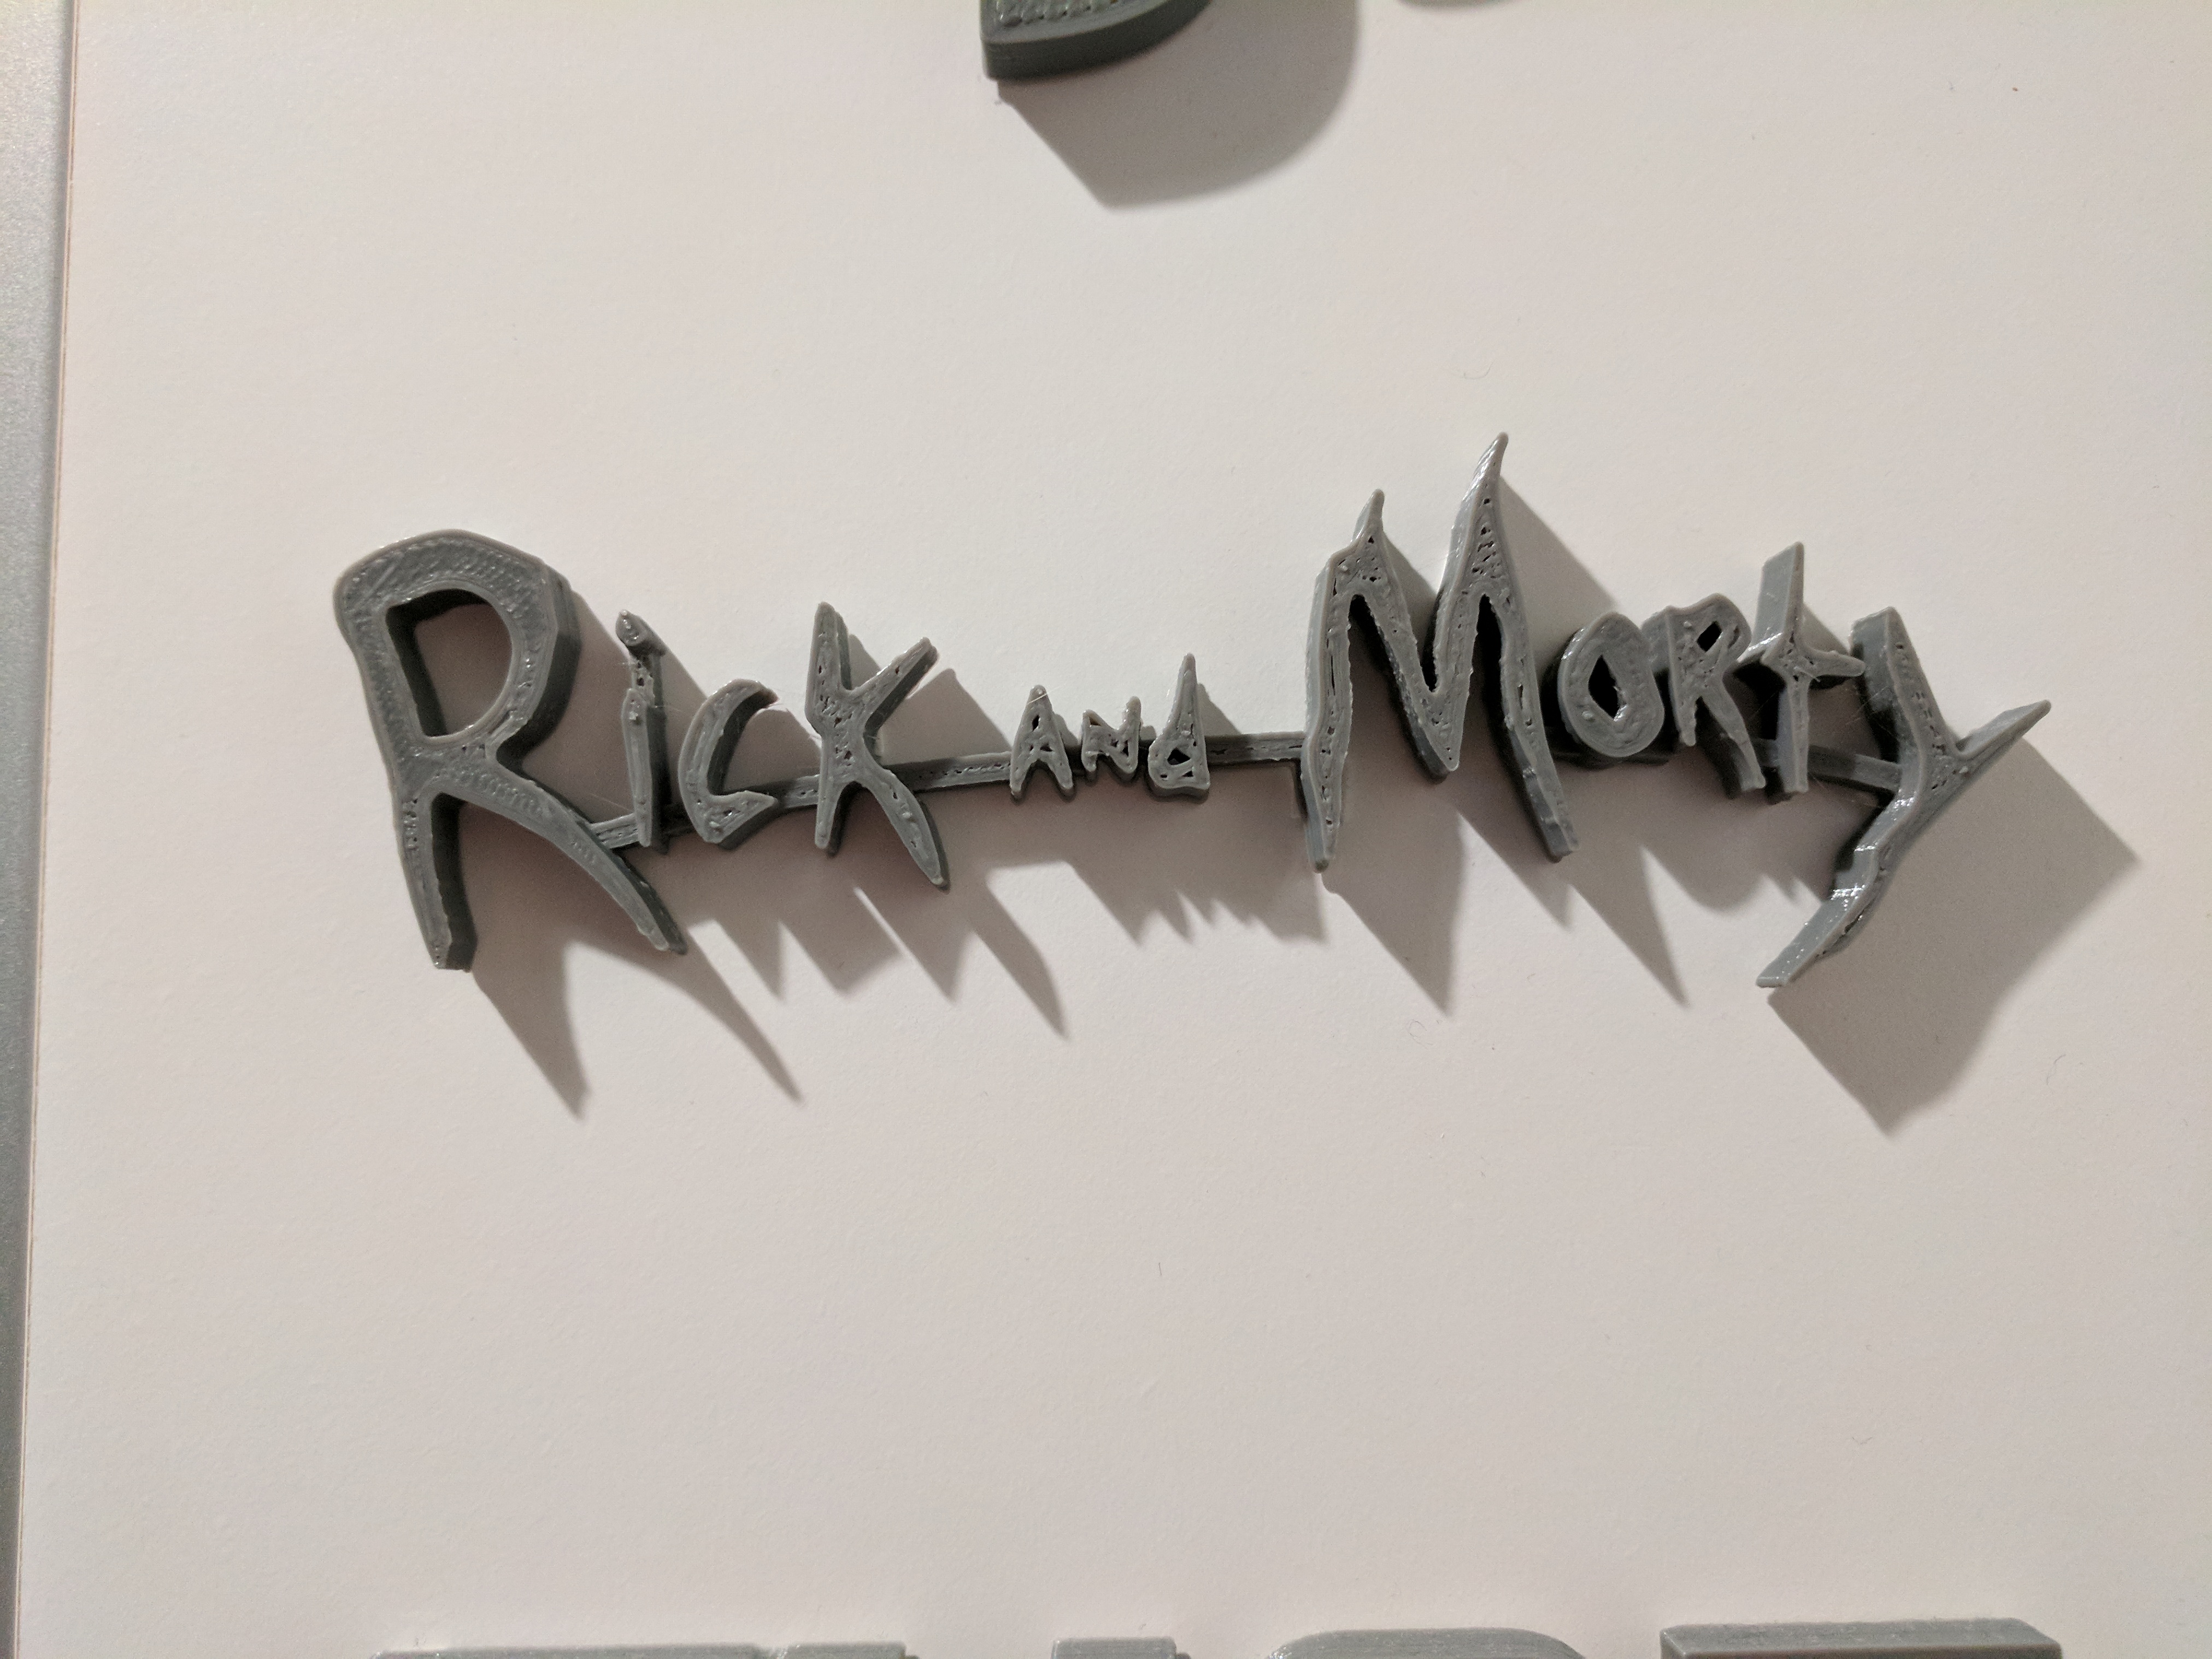 Rick and Morty Logo